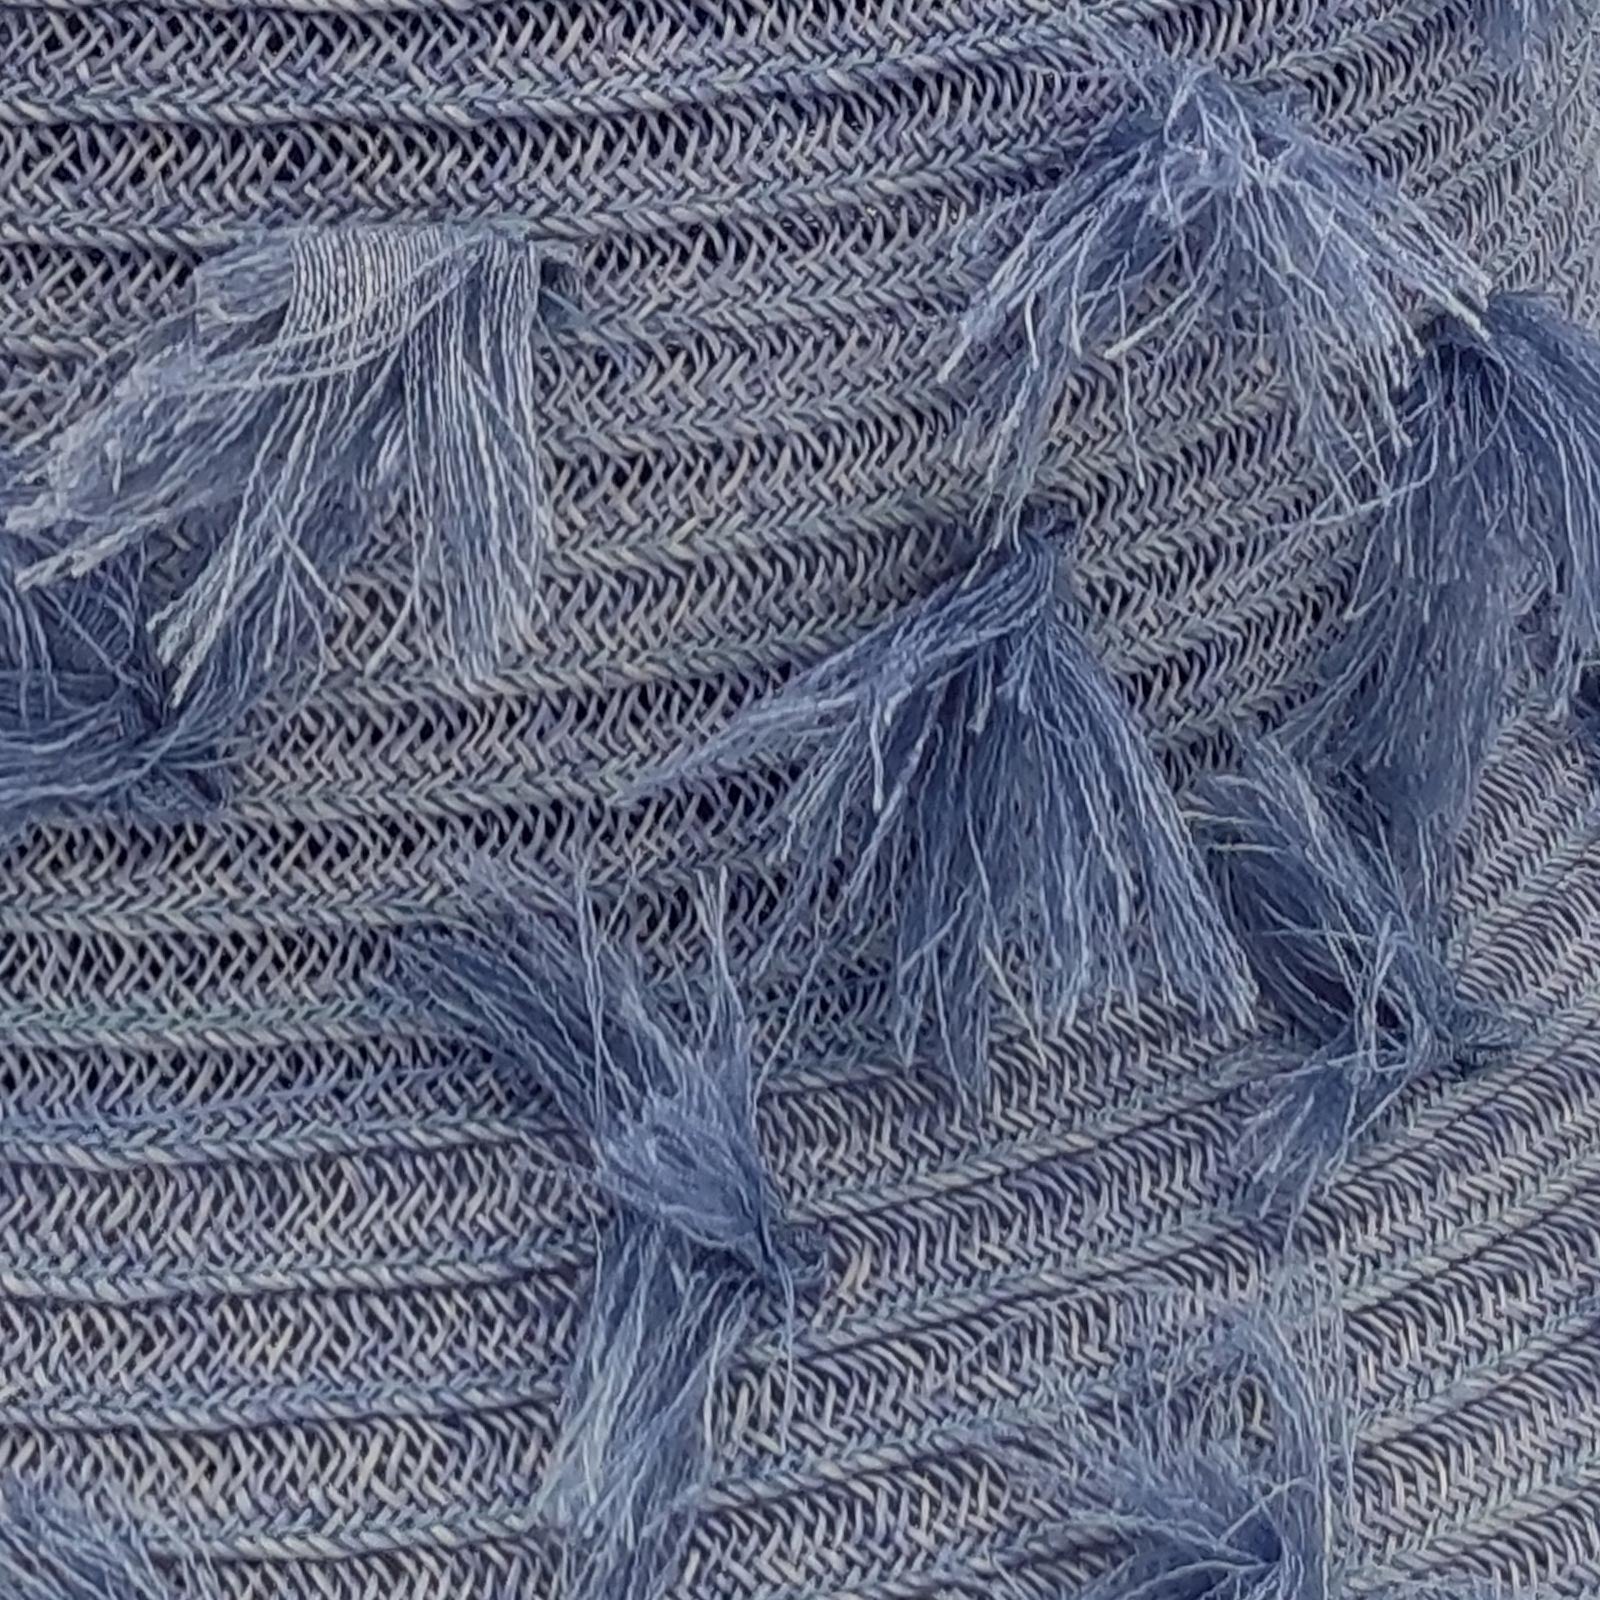 Cloche Bon Effiloche 100% Capri jeans straw hat detail